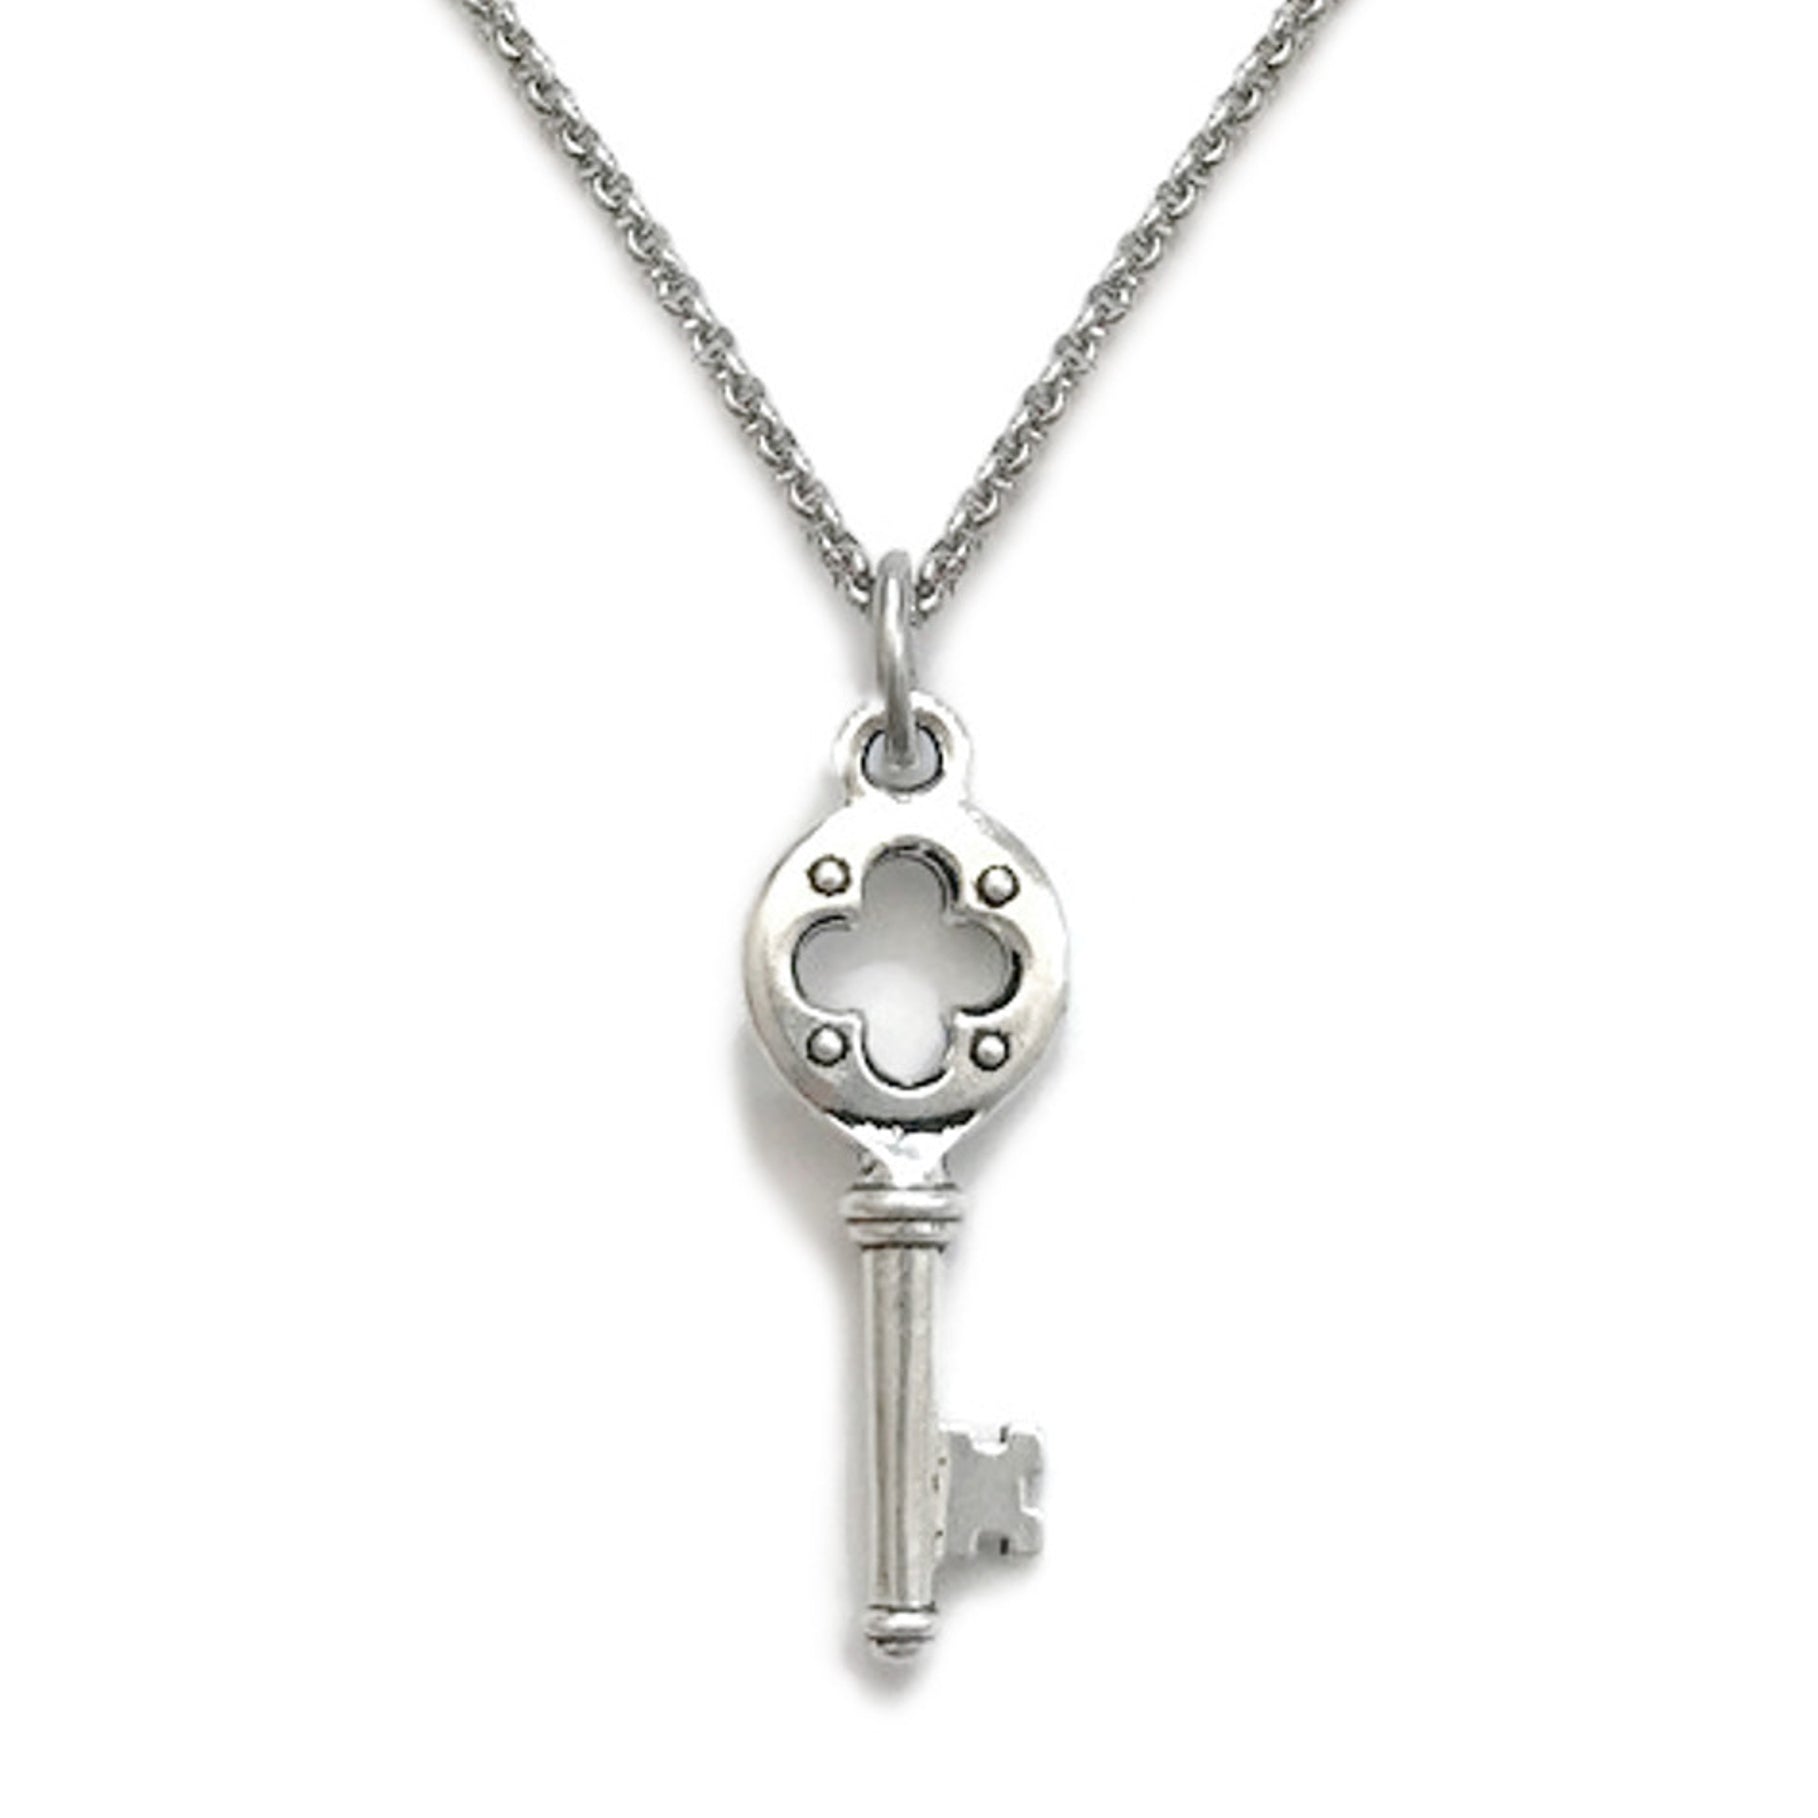 Small Silver Key Charm Necklace - Medieval Design - Skeleton Key - Loralyn Designs 18